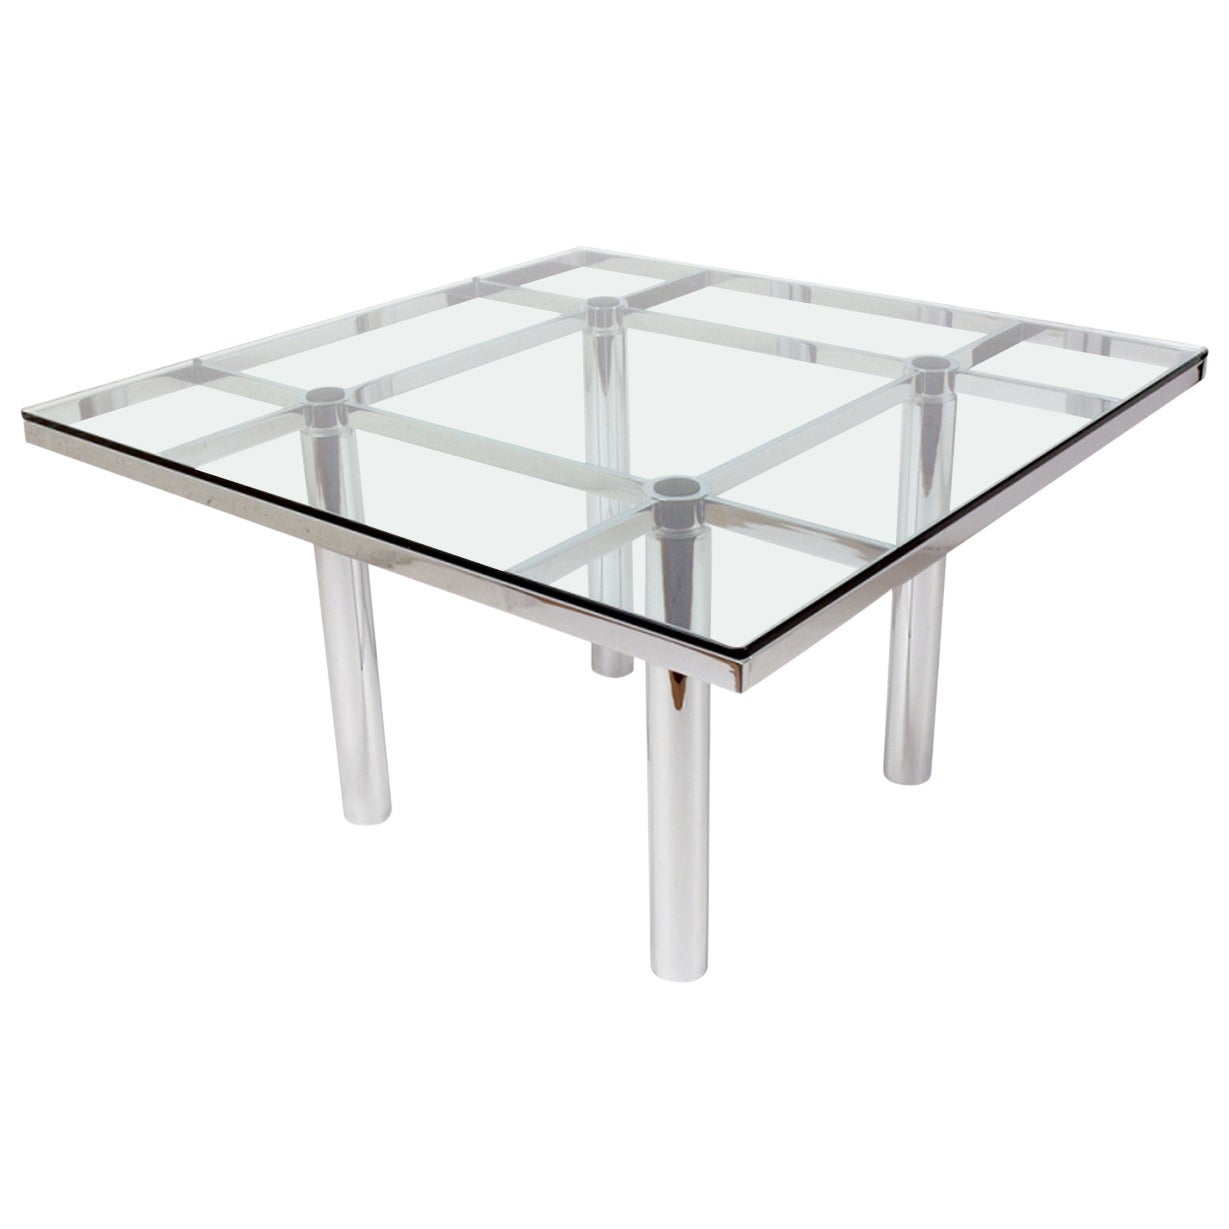 Original "André" table, designed by Tobia Scarpa for Gavina